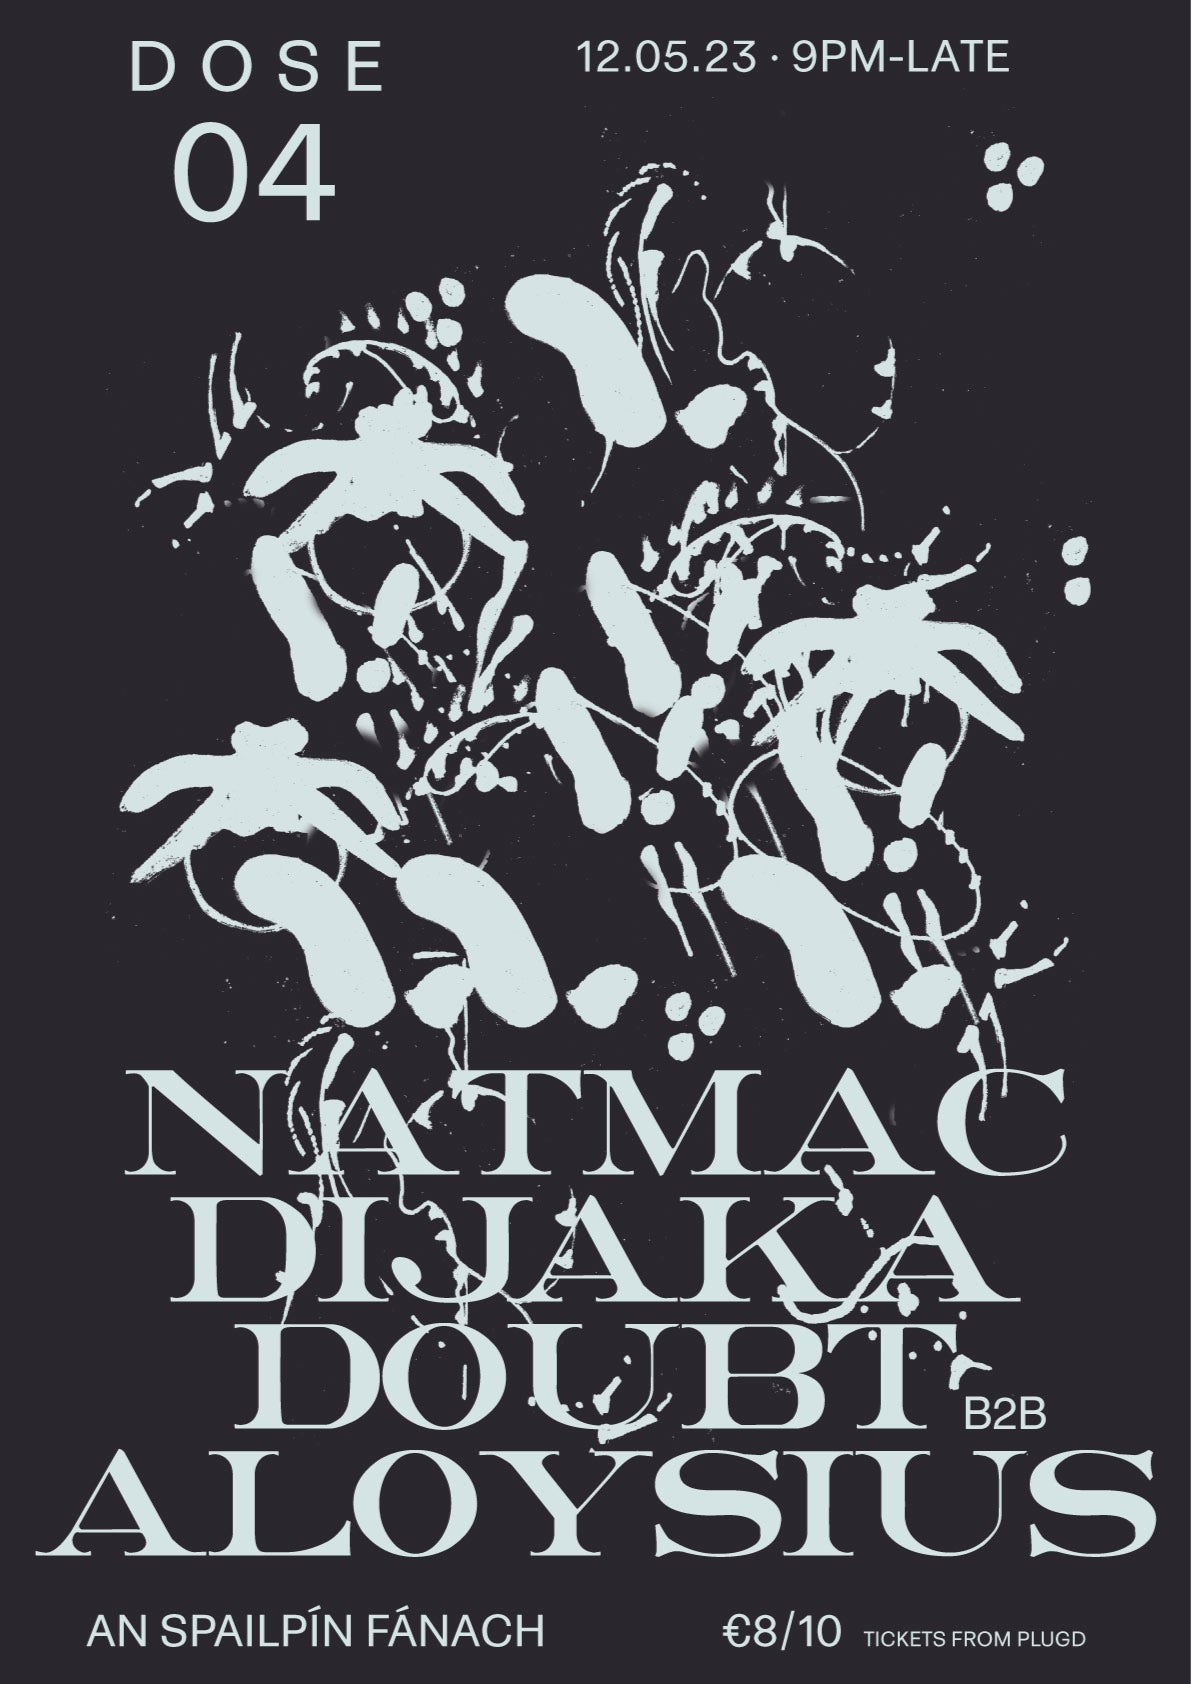 Natmac with Aloysius, dijaka &amp; Doubt